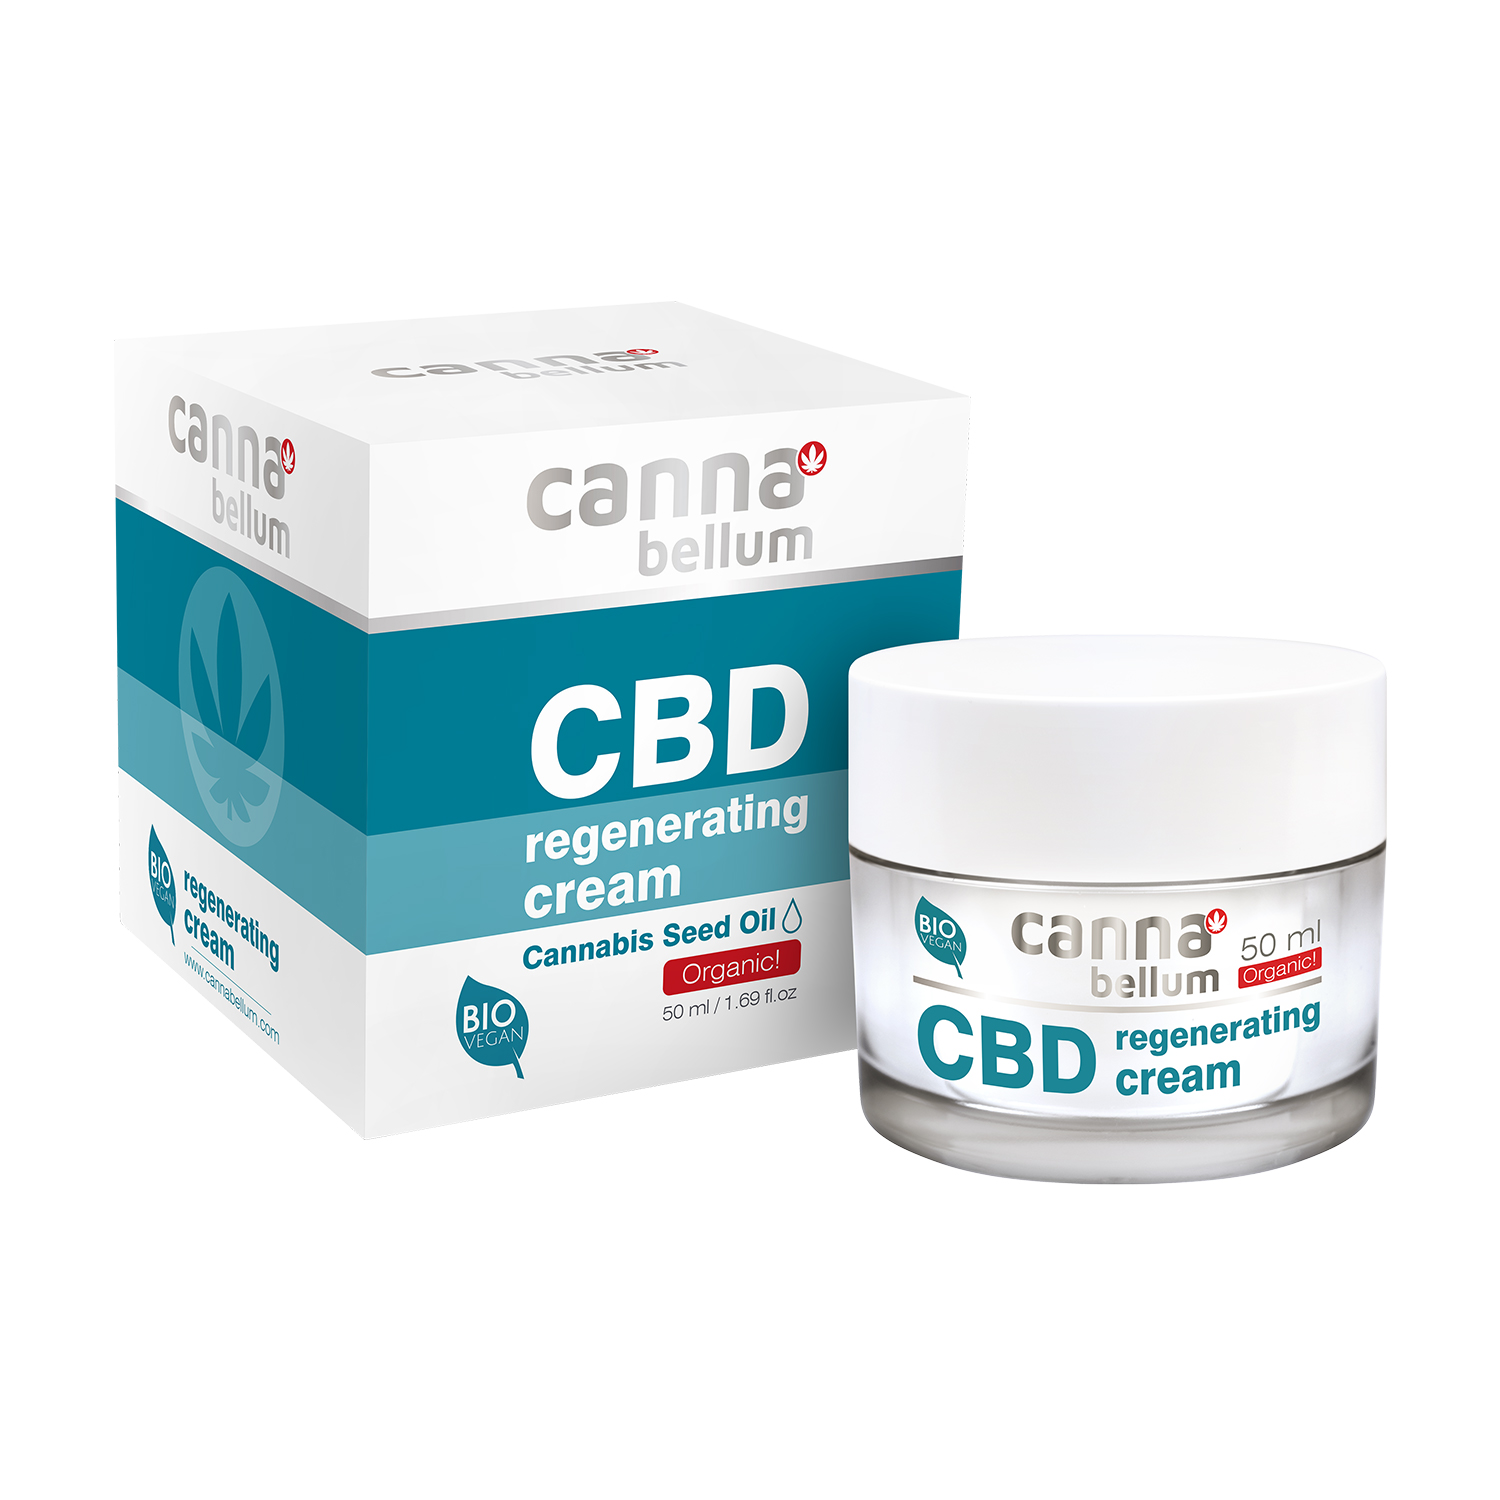 Cannabellum CBD regenerating cream 50ml P1253 komplet WEB 32